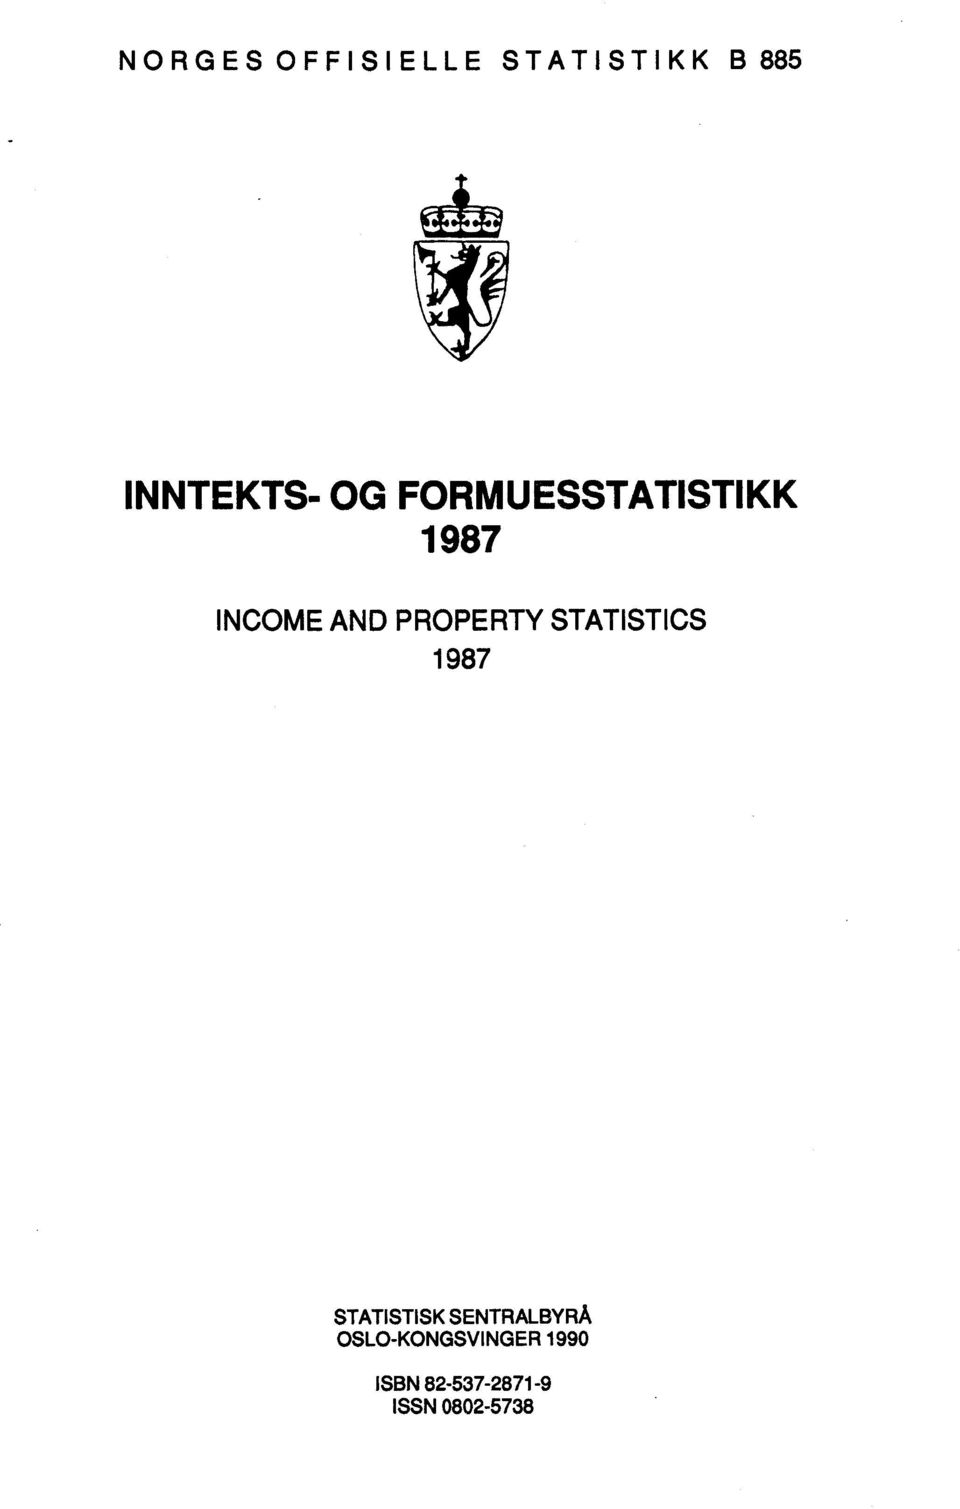 PROPERTY STATISTICS 1987 STATISTISK